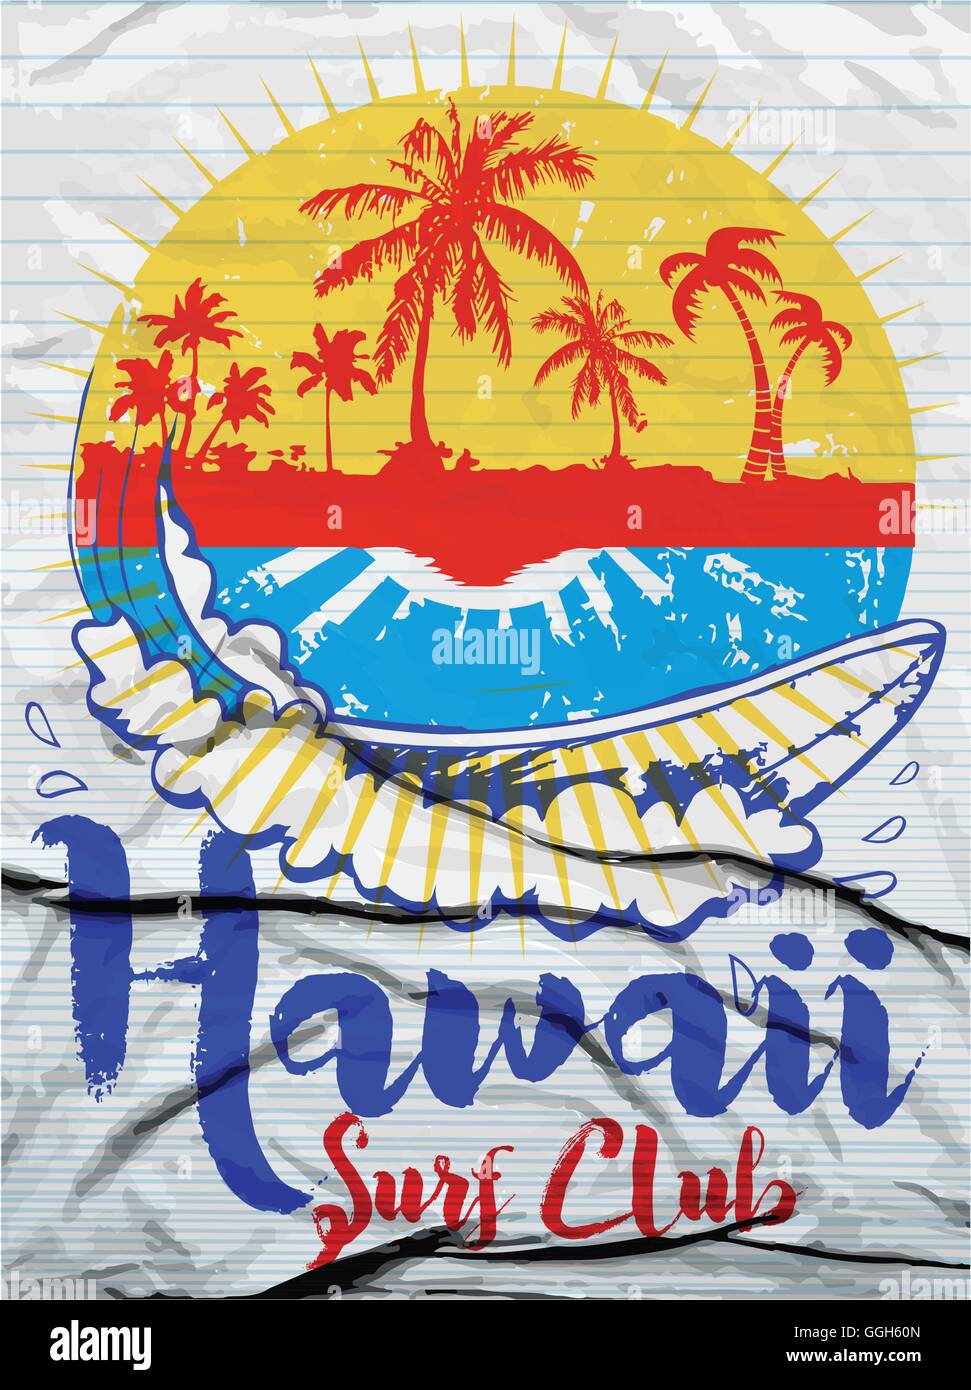 Hawaii Surfen Abbildung / Grafik T-shirt / Vektoren / Typografie / Pazifik Welle surfen / Sommer tropische Hitze Druck / print Vec Surfen Stock Vektor